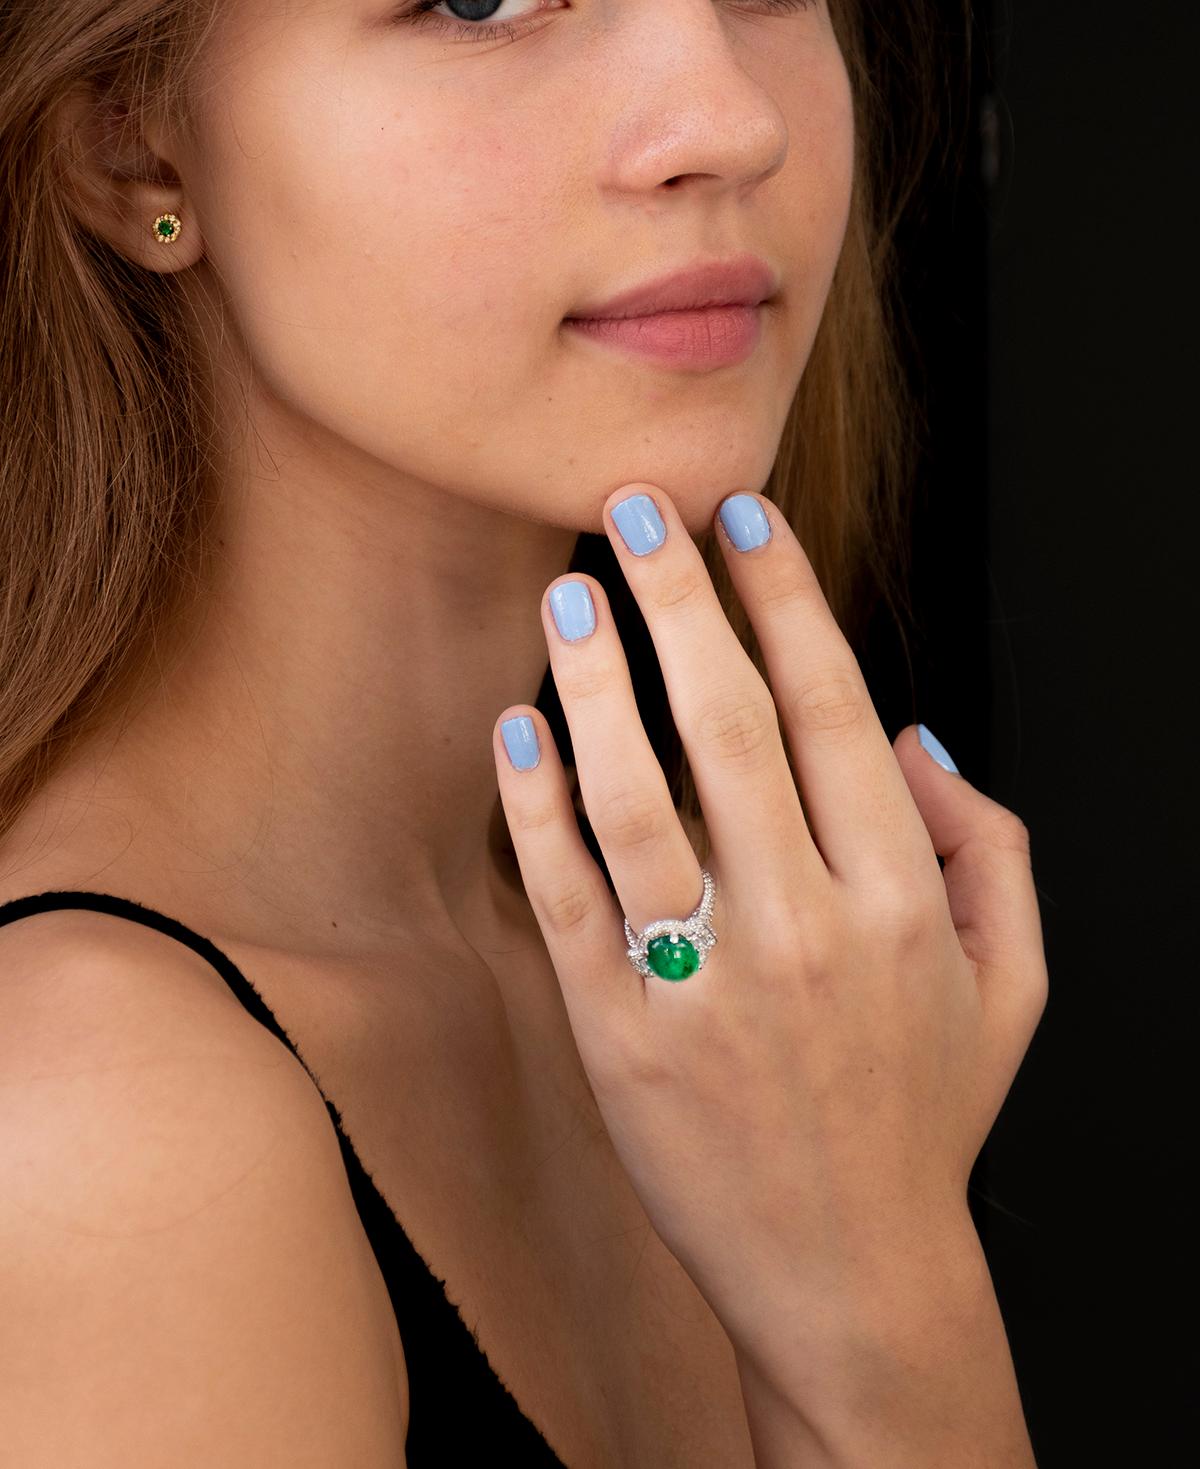 Round Cut White Gold Emerald Diamond Earrings Weighing 0.47 Carat